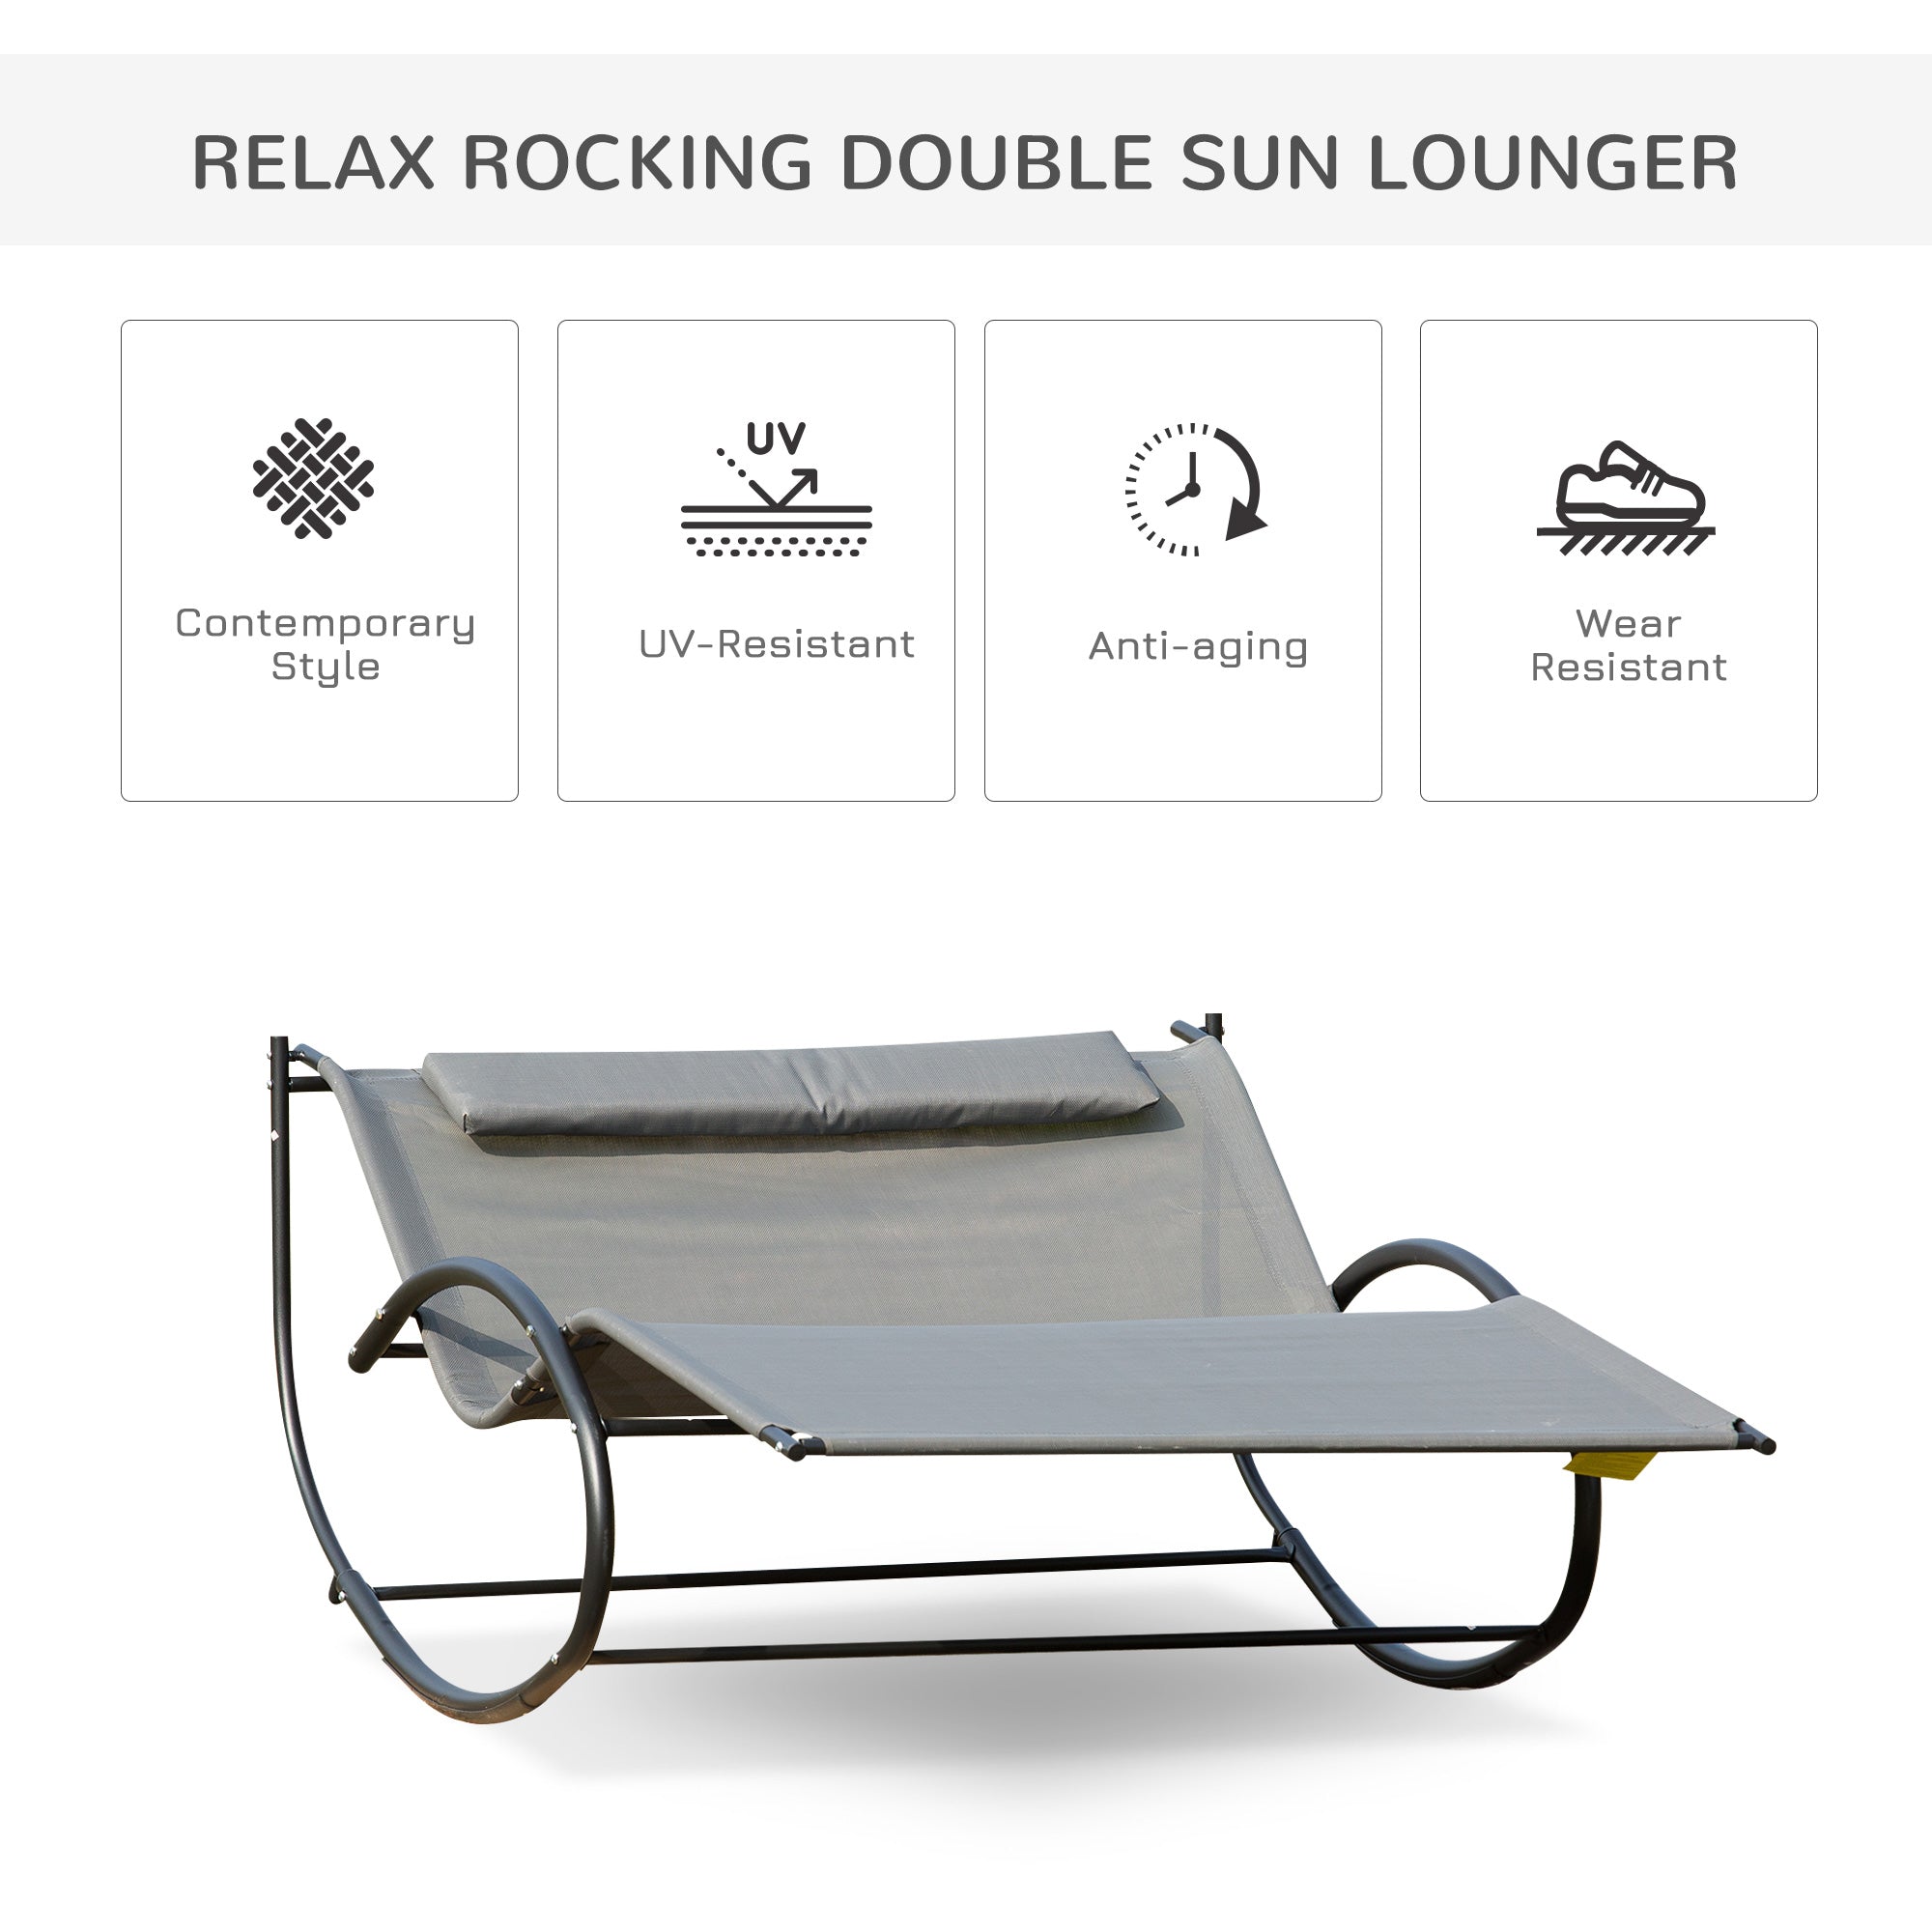 Outsunny Double Hammock Chair Sun Lounger Outdoor Patio Garden Swing Rock Seat Grey - Inspirely